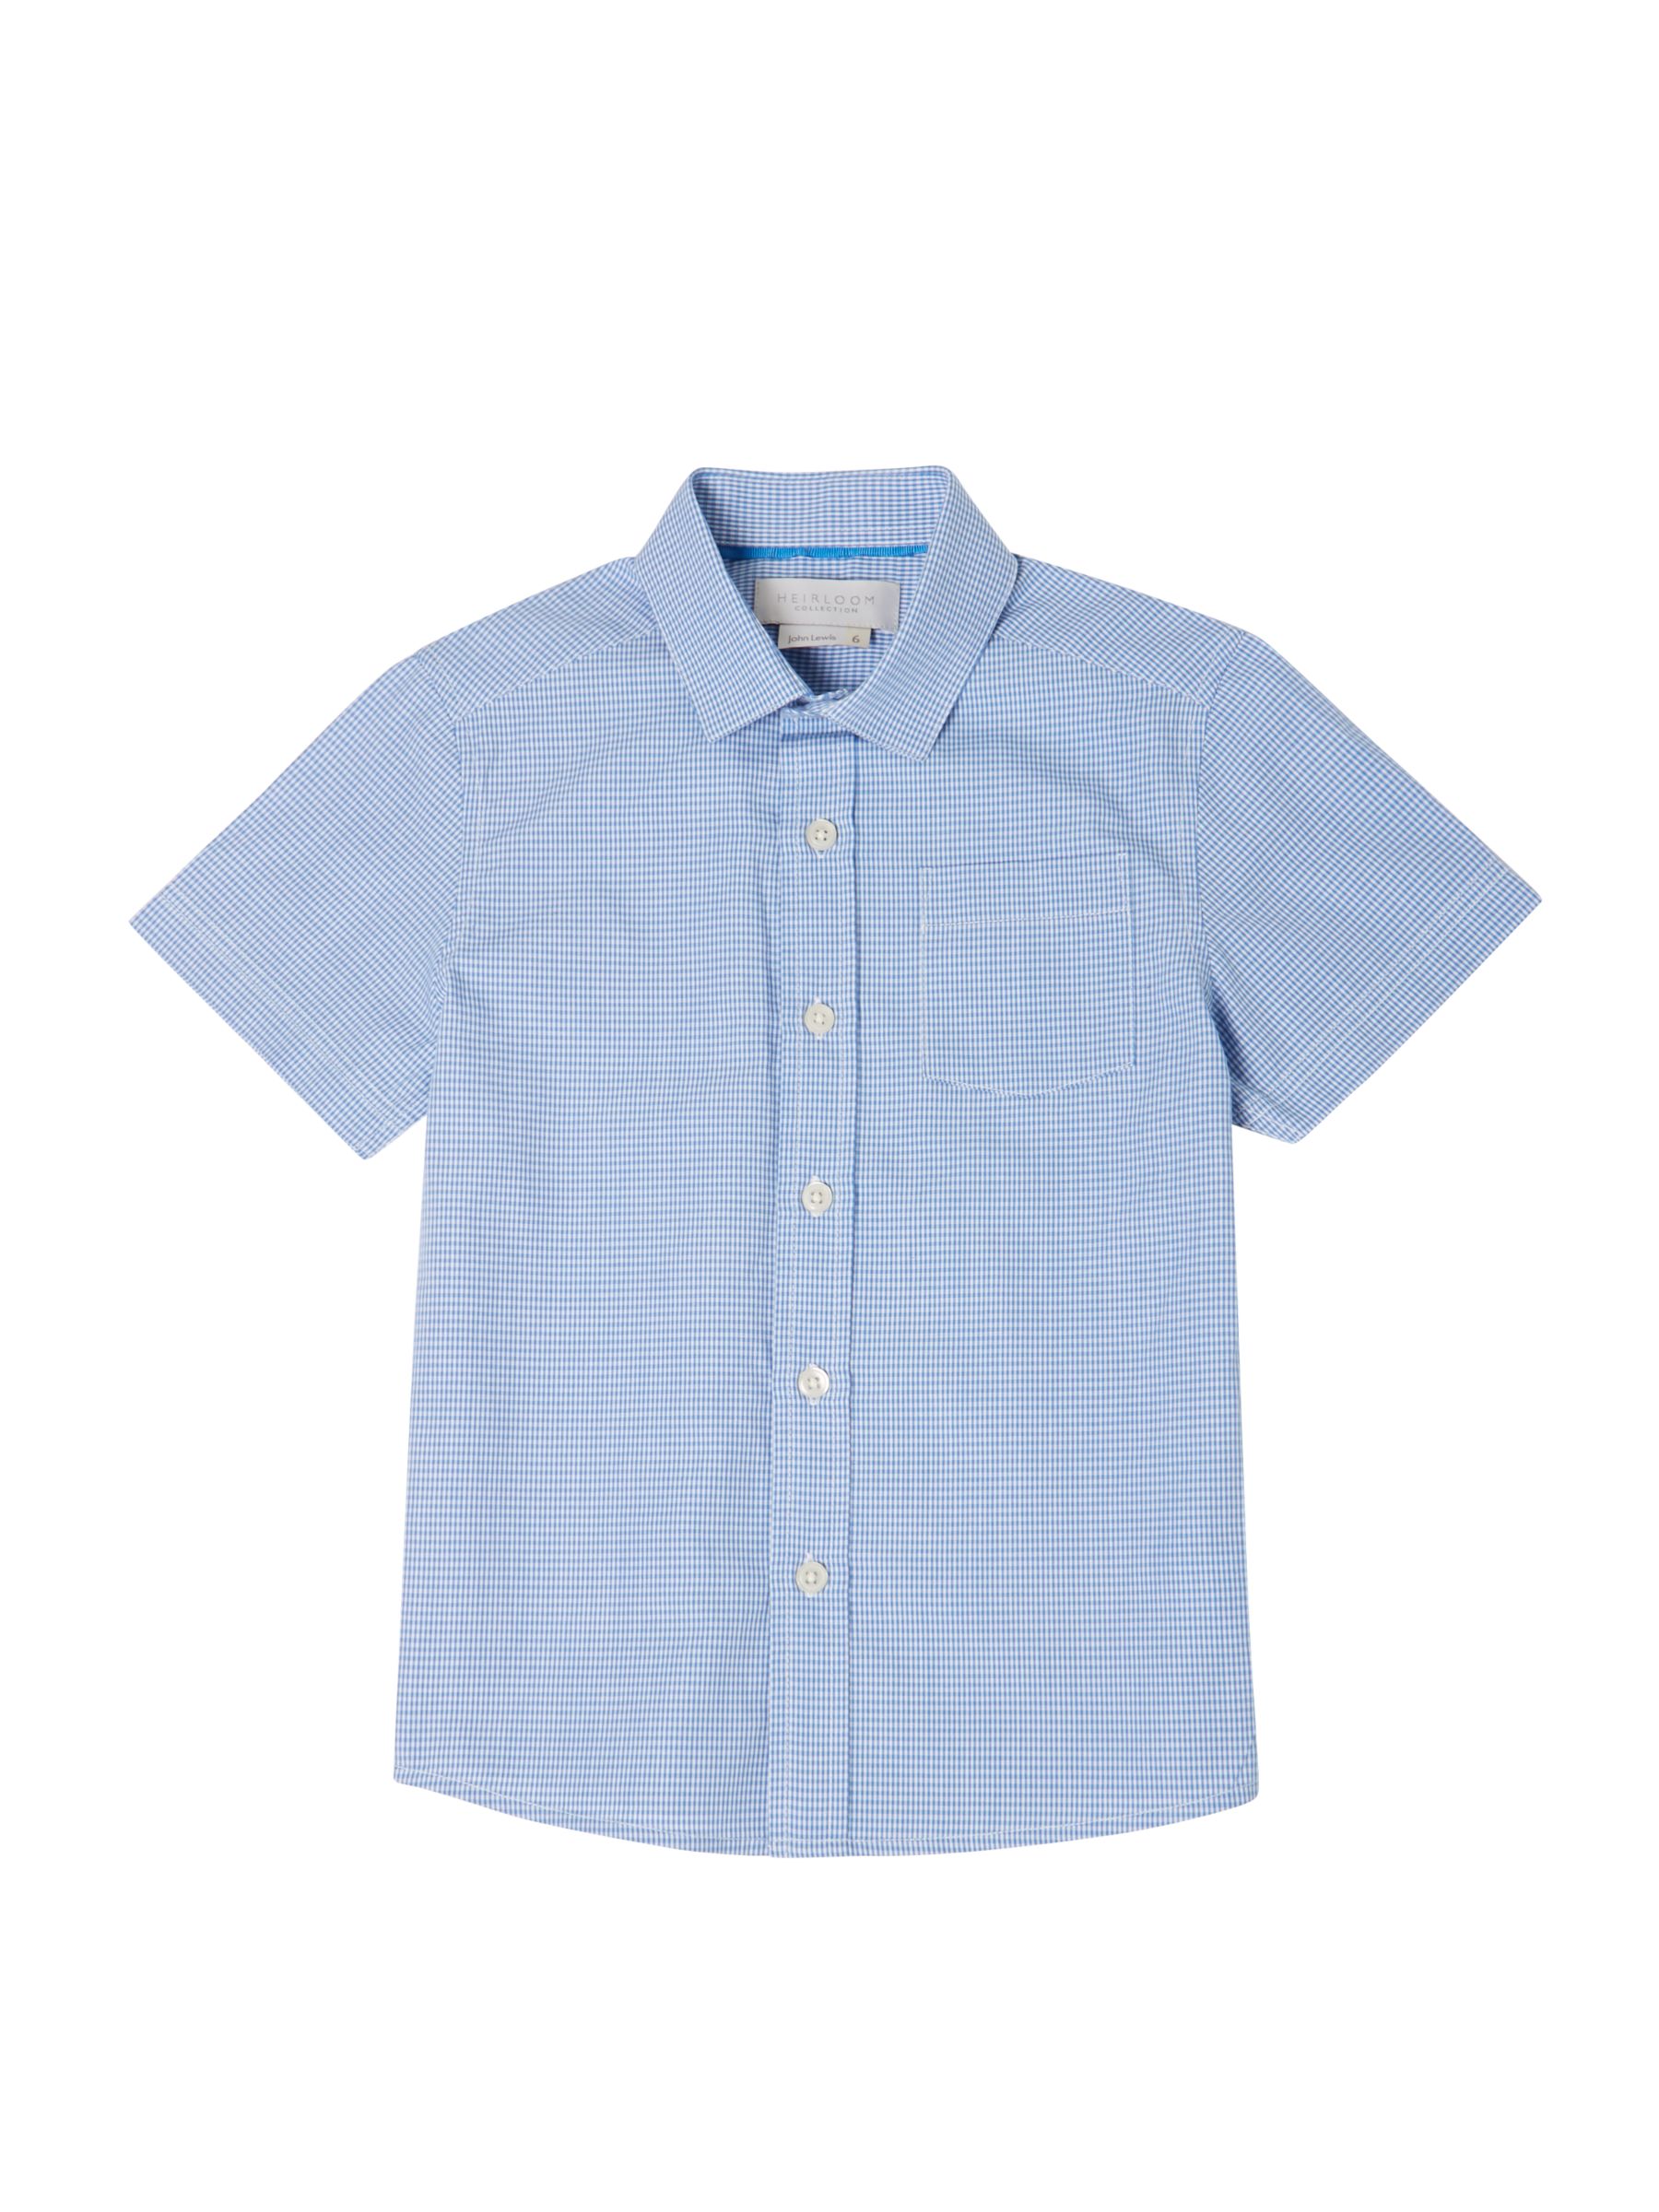 John Lewis Heirloom Collection Boys' Short Sleeve Gingham Shirt, Blue